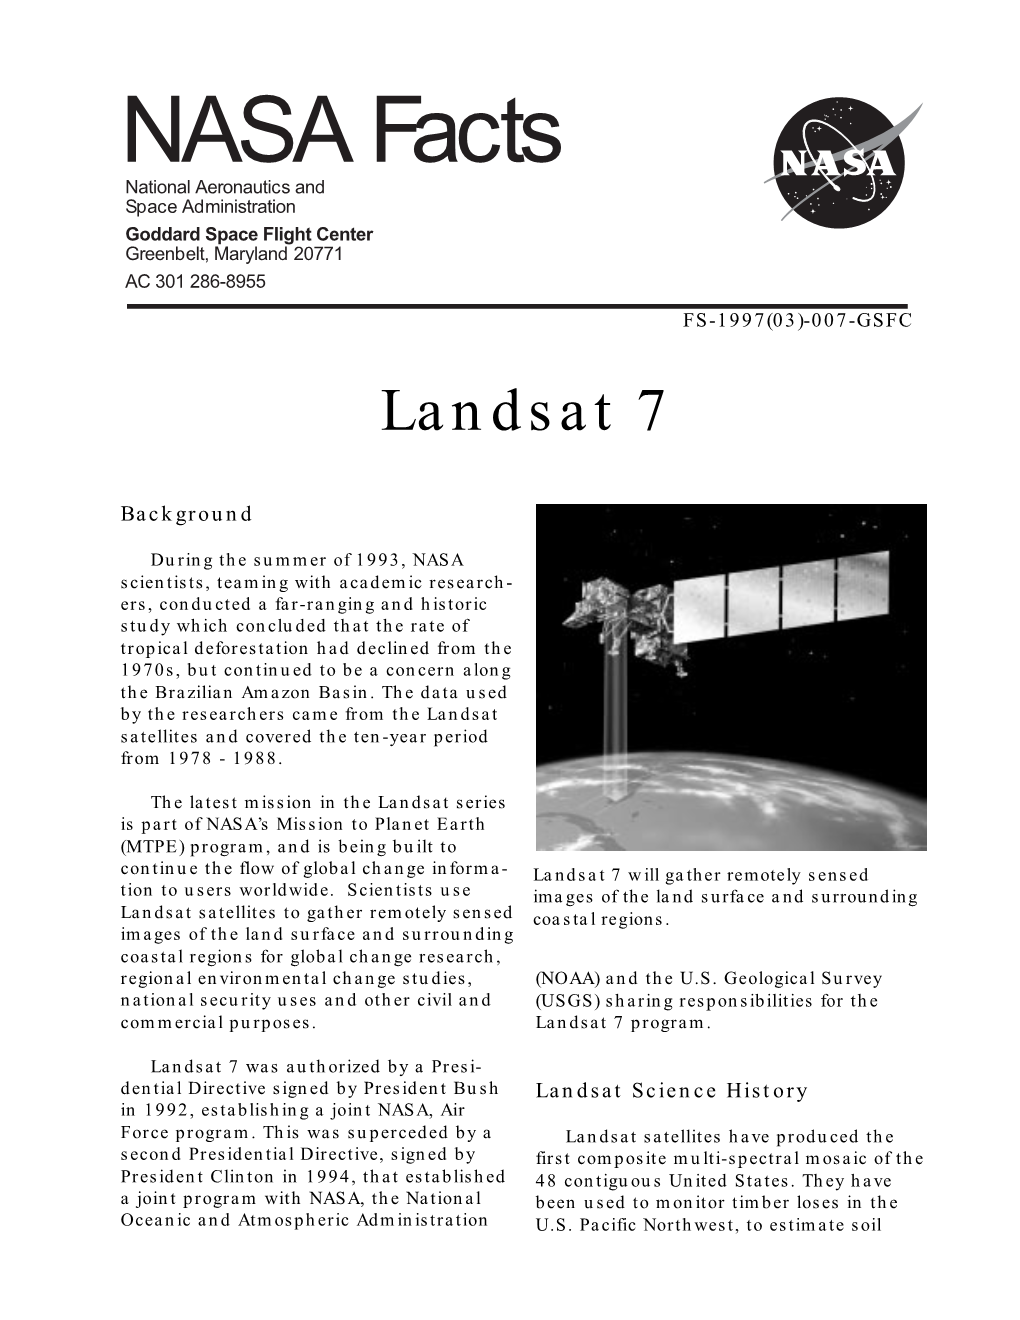 NASA Facts National Aeronautics and Space Administration Goddard Space Flight Center Greenbelt, Maryland 20771 AC 301 286-8955 FS-1997(03)-007-GSFC Landsat 7